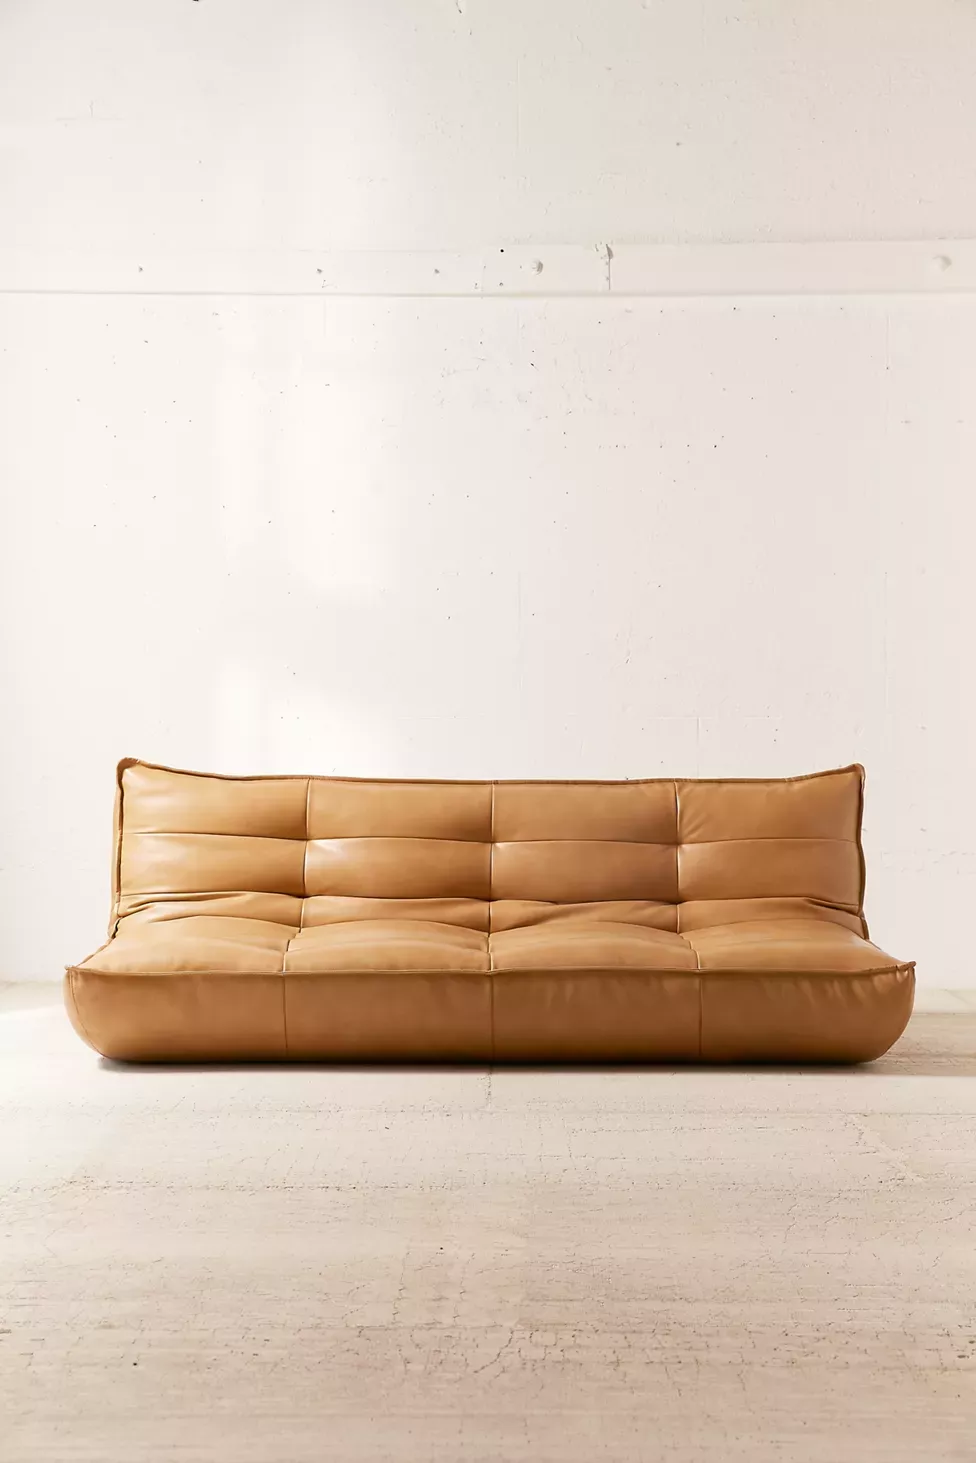 Seating furniture – sleeper sofa
sectional